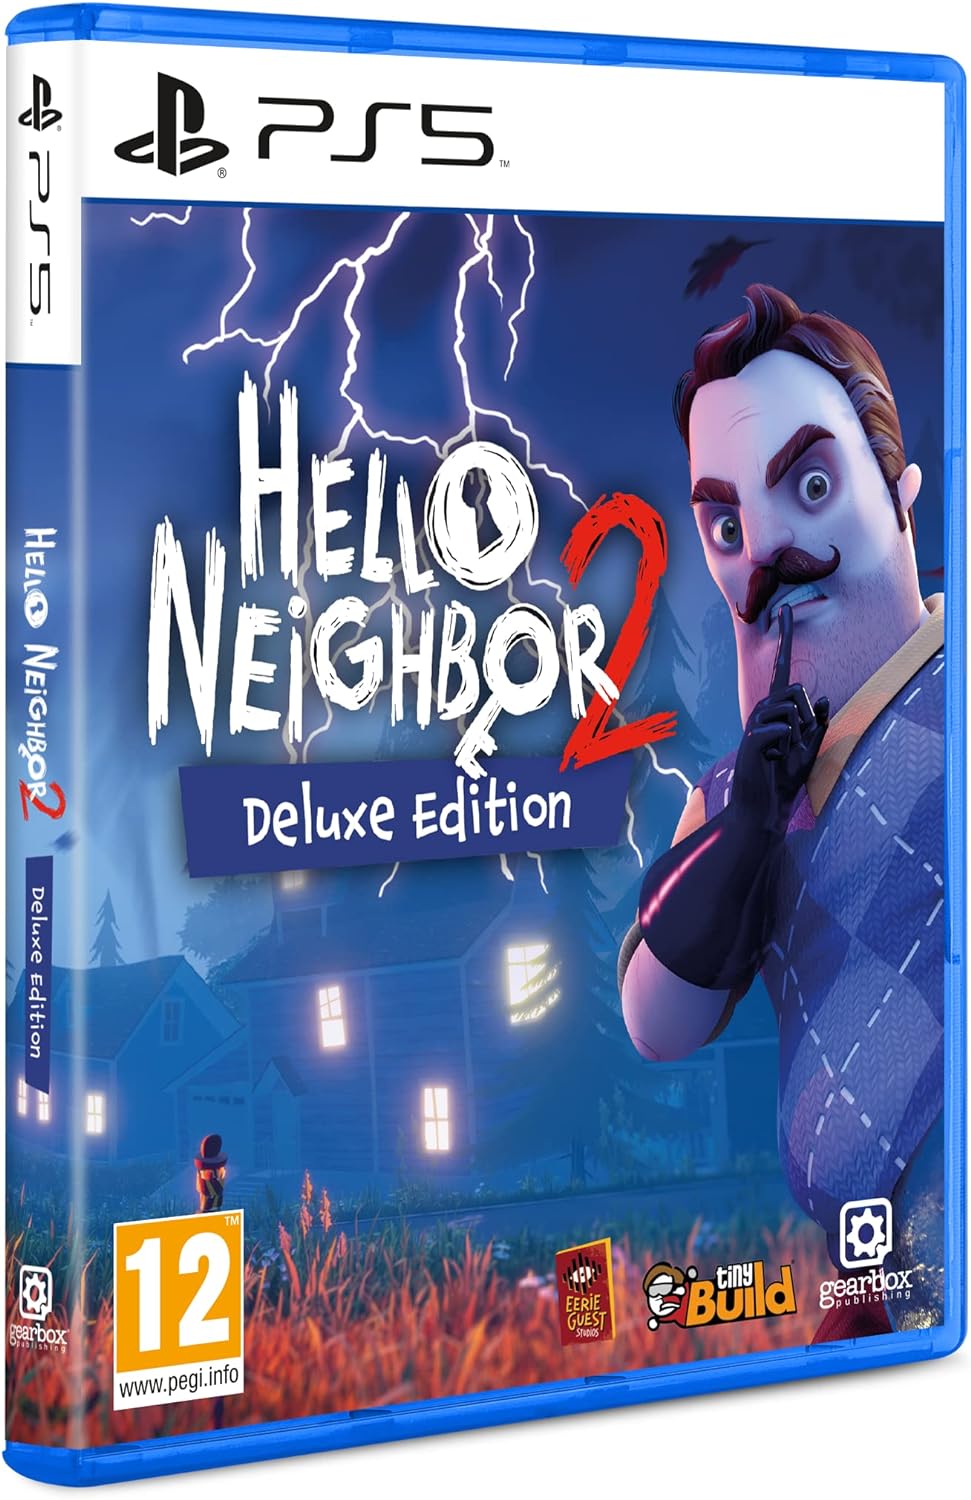 Hello Neighbor 2 (Deluxe Edition) PS5